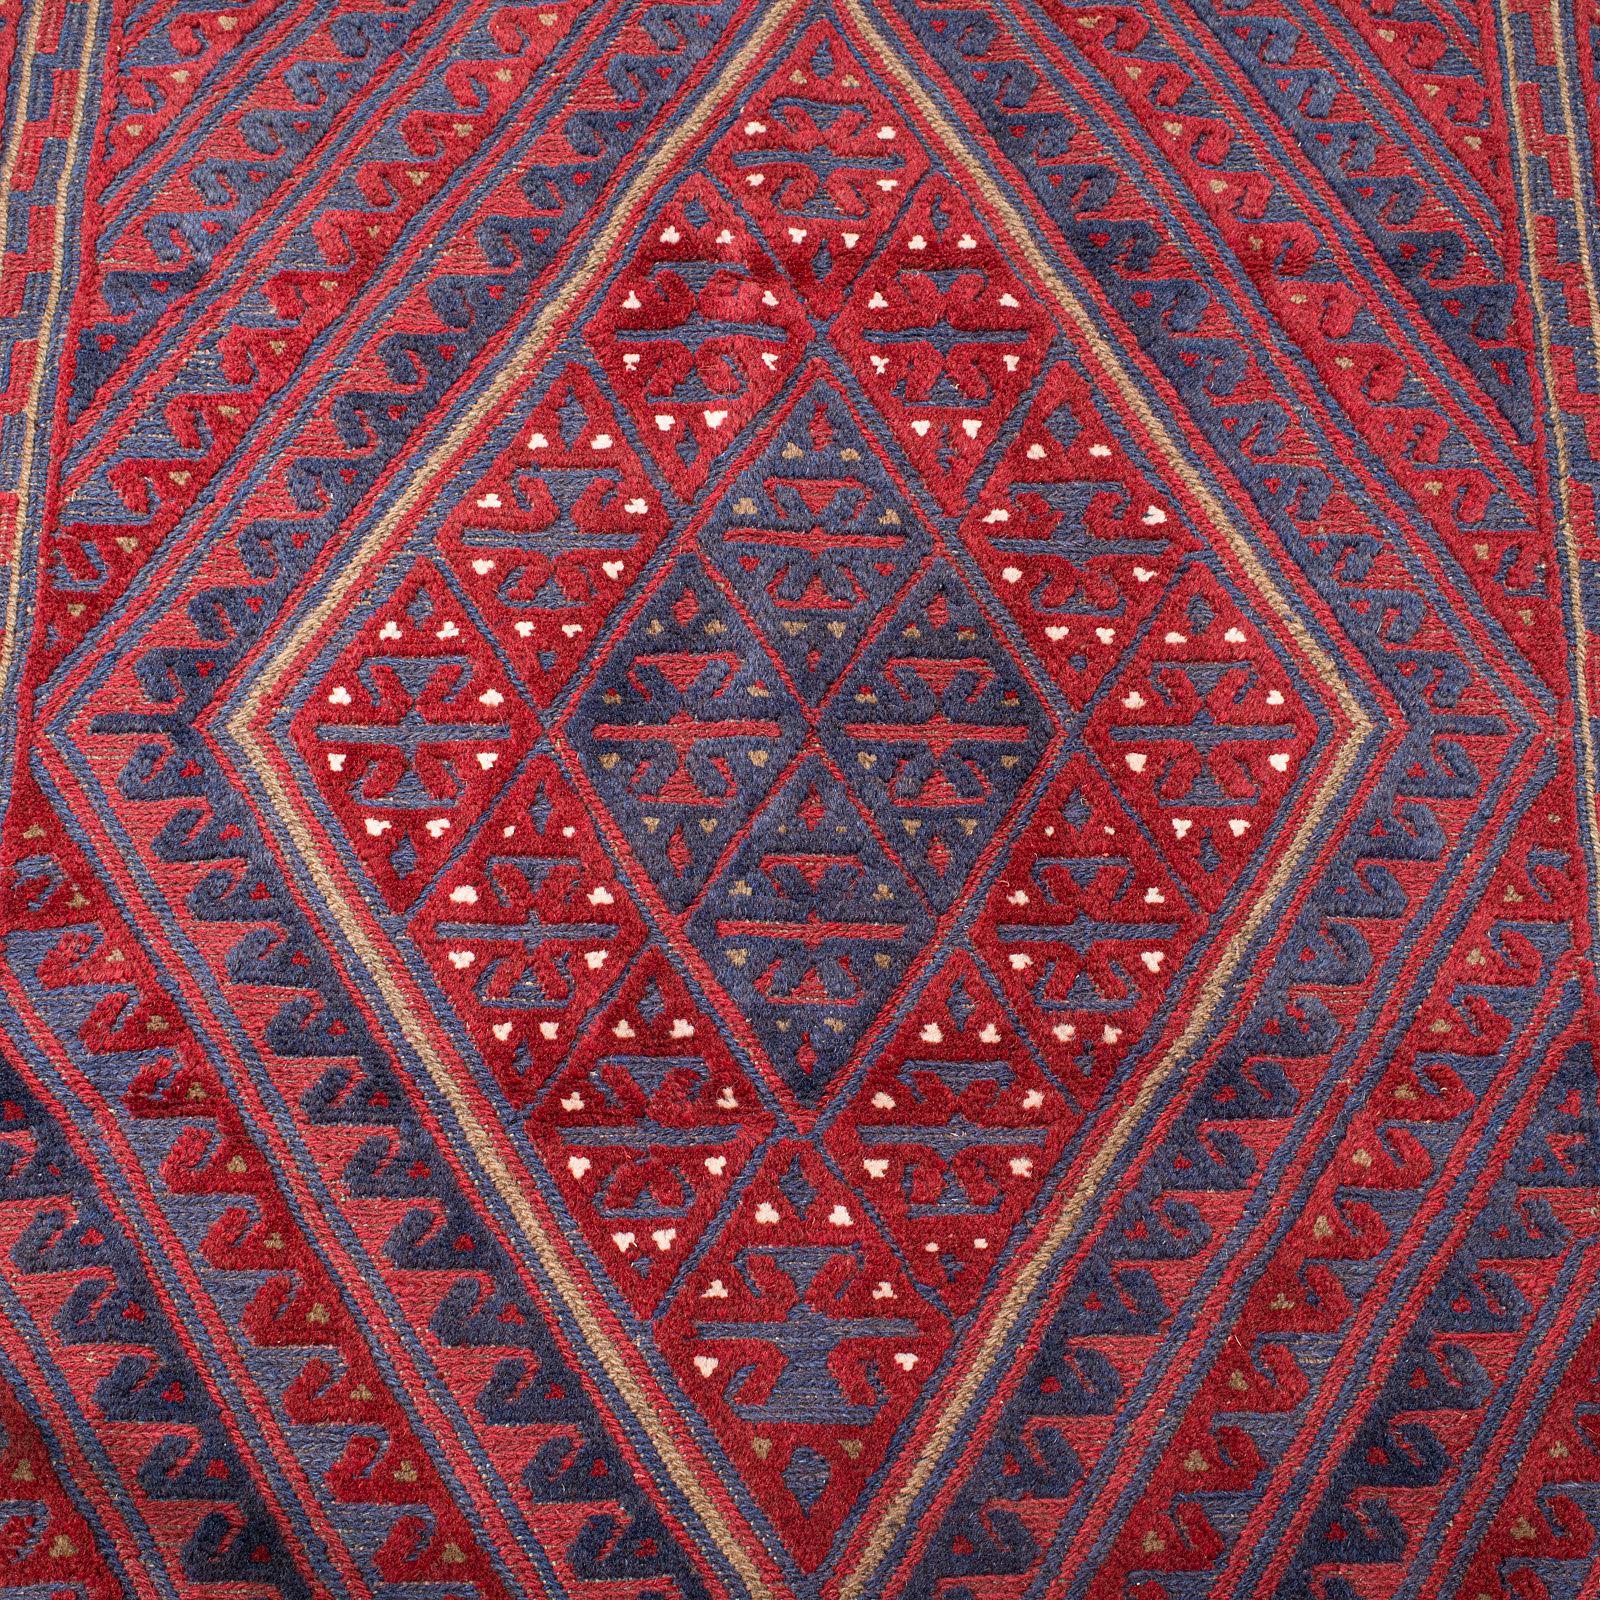 Meshwani Gazek tapis caucasien vintage tissé caucasien, hall, salon, tapis, fin du XXe siècle en vente 5